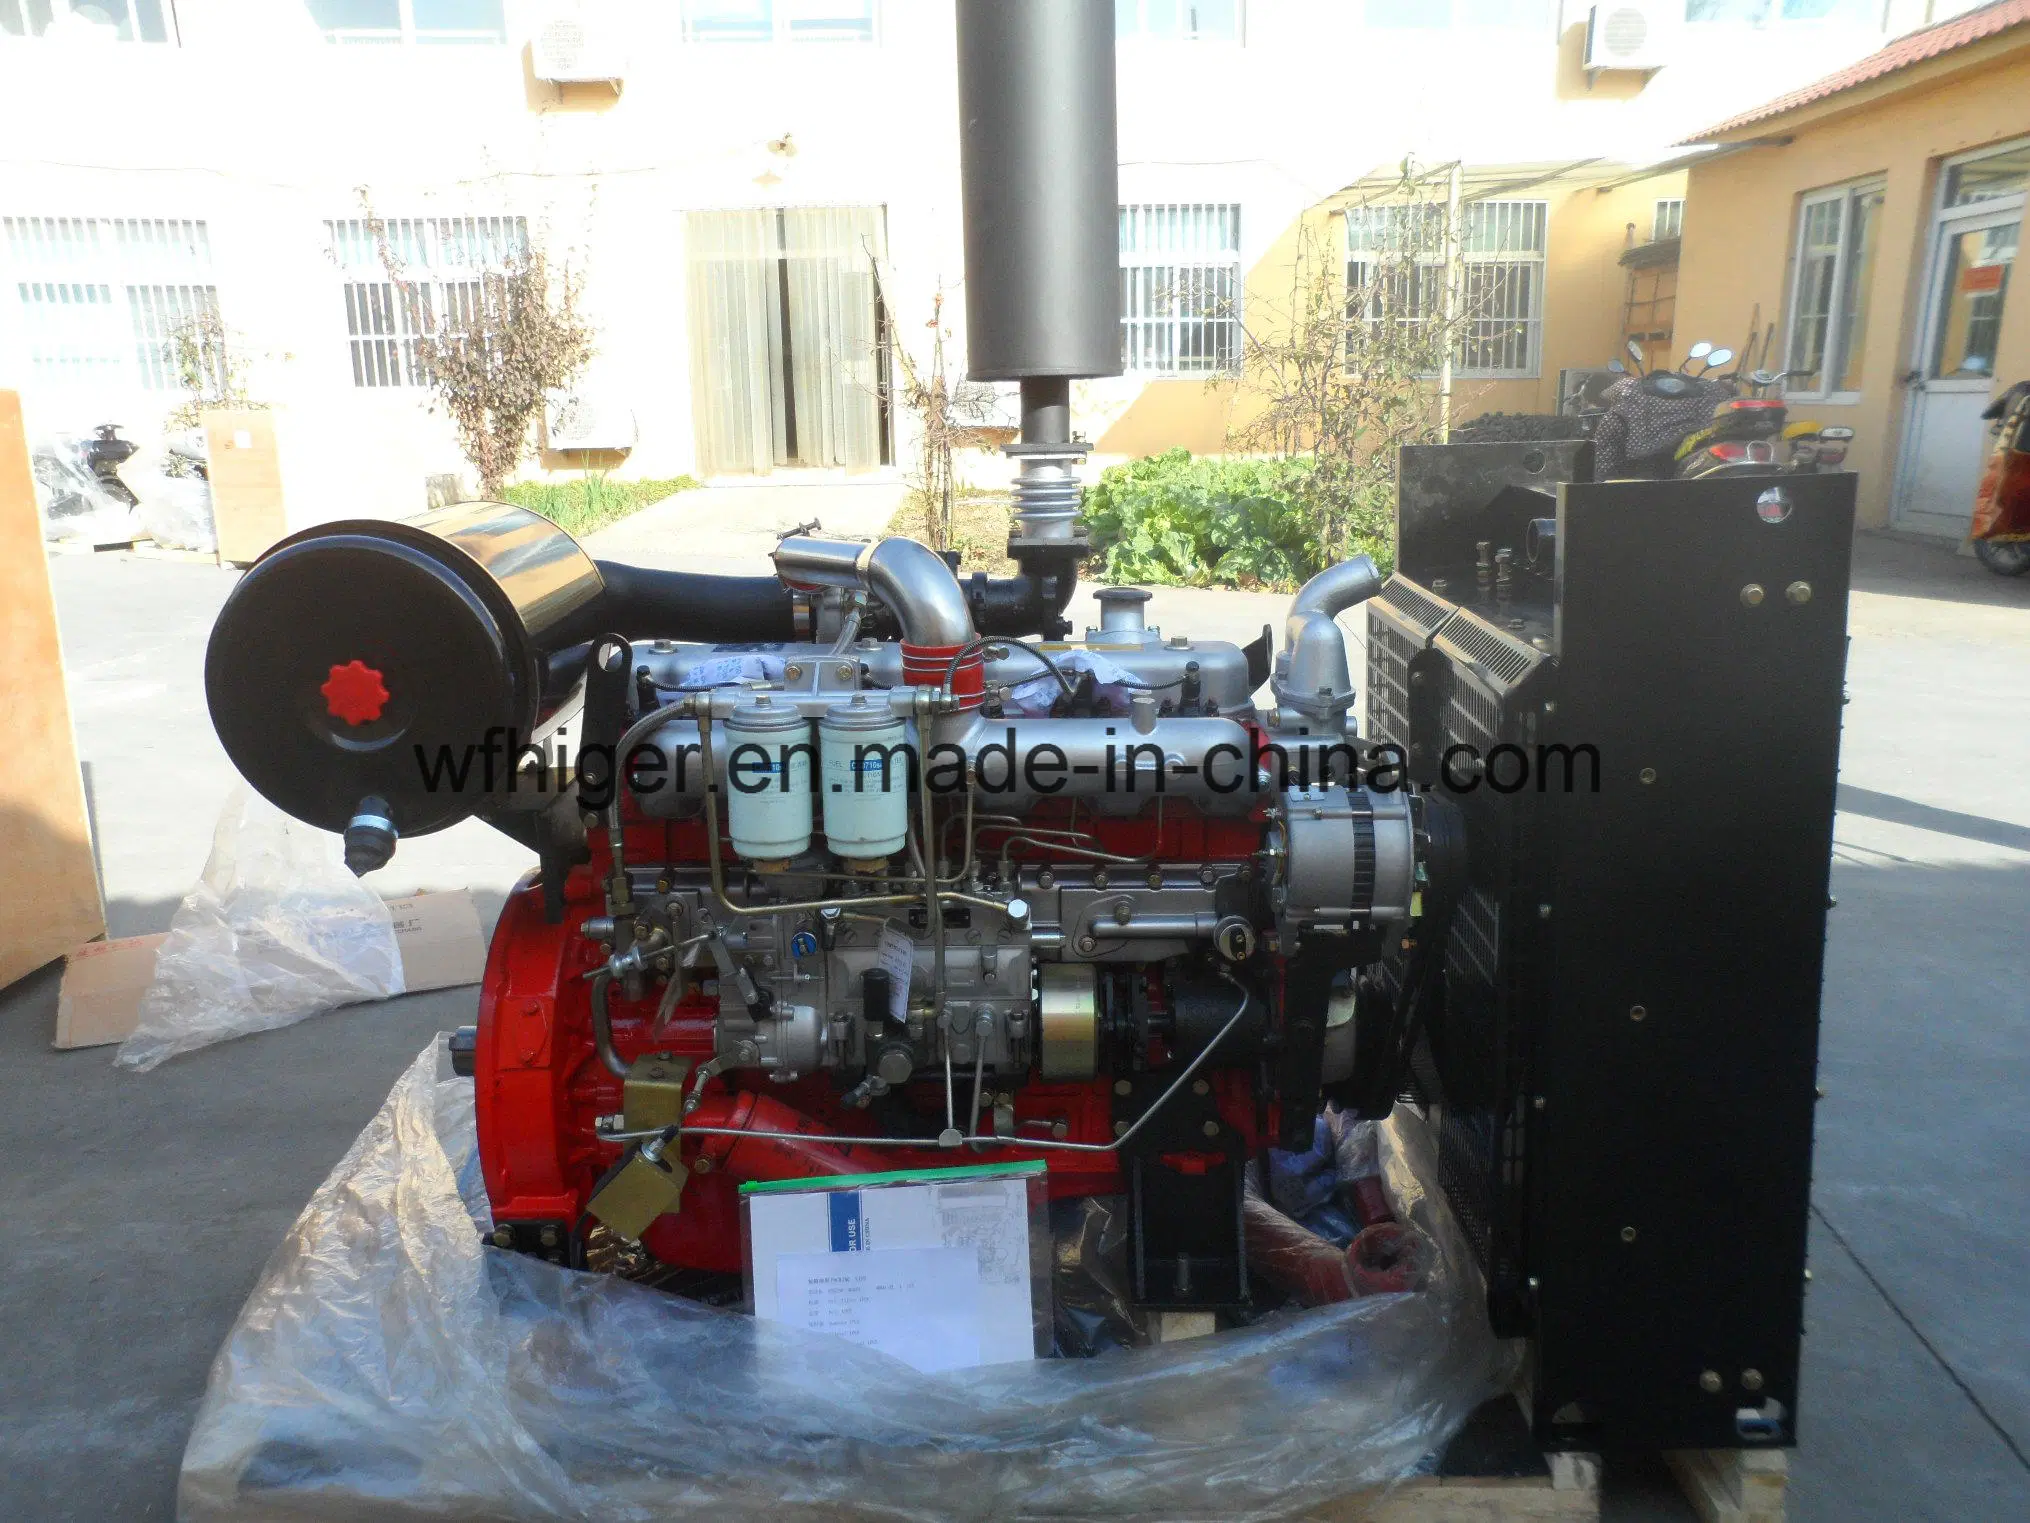 Isuzu Technology Diesel Engine for Generator/Water Pump/Fire Pump 4ja1, 4jb1, 4bd, 6bd, 6tw